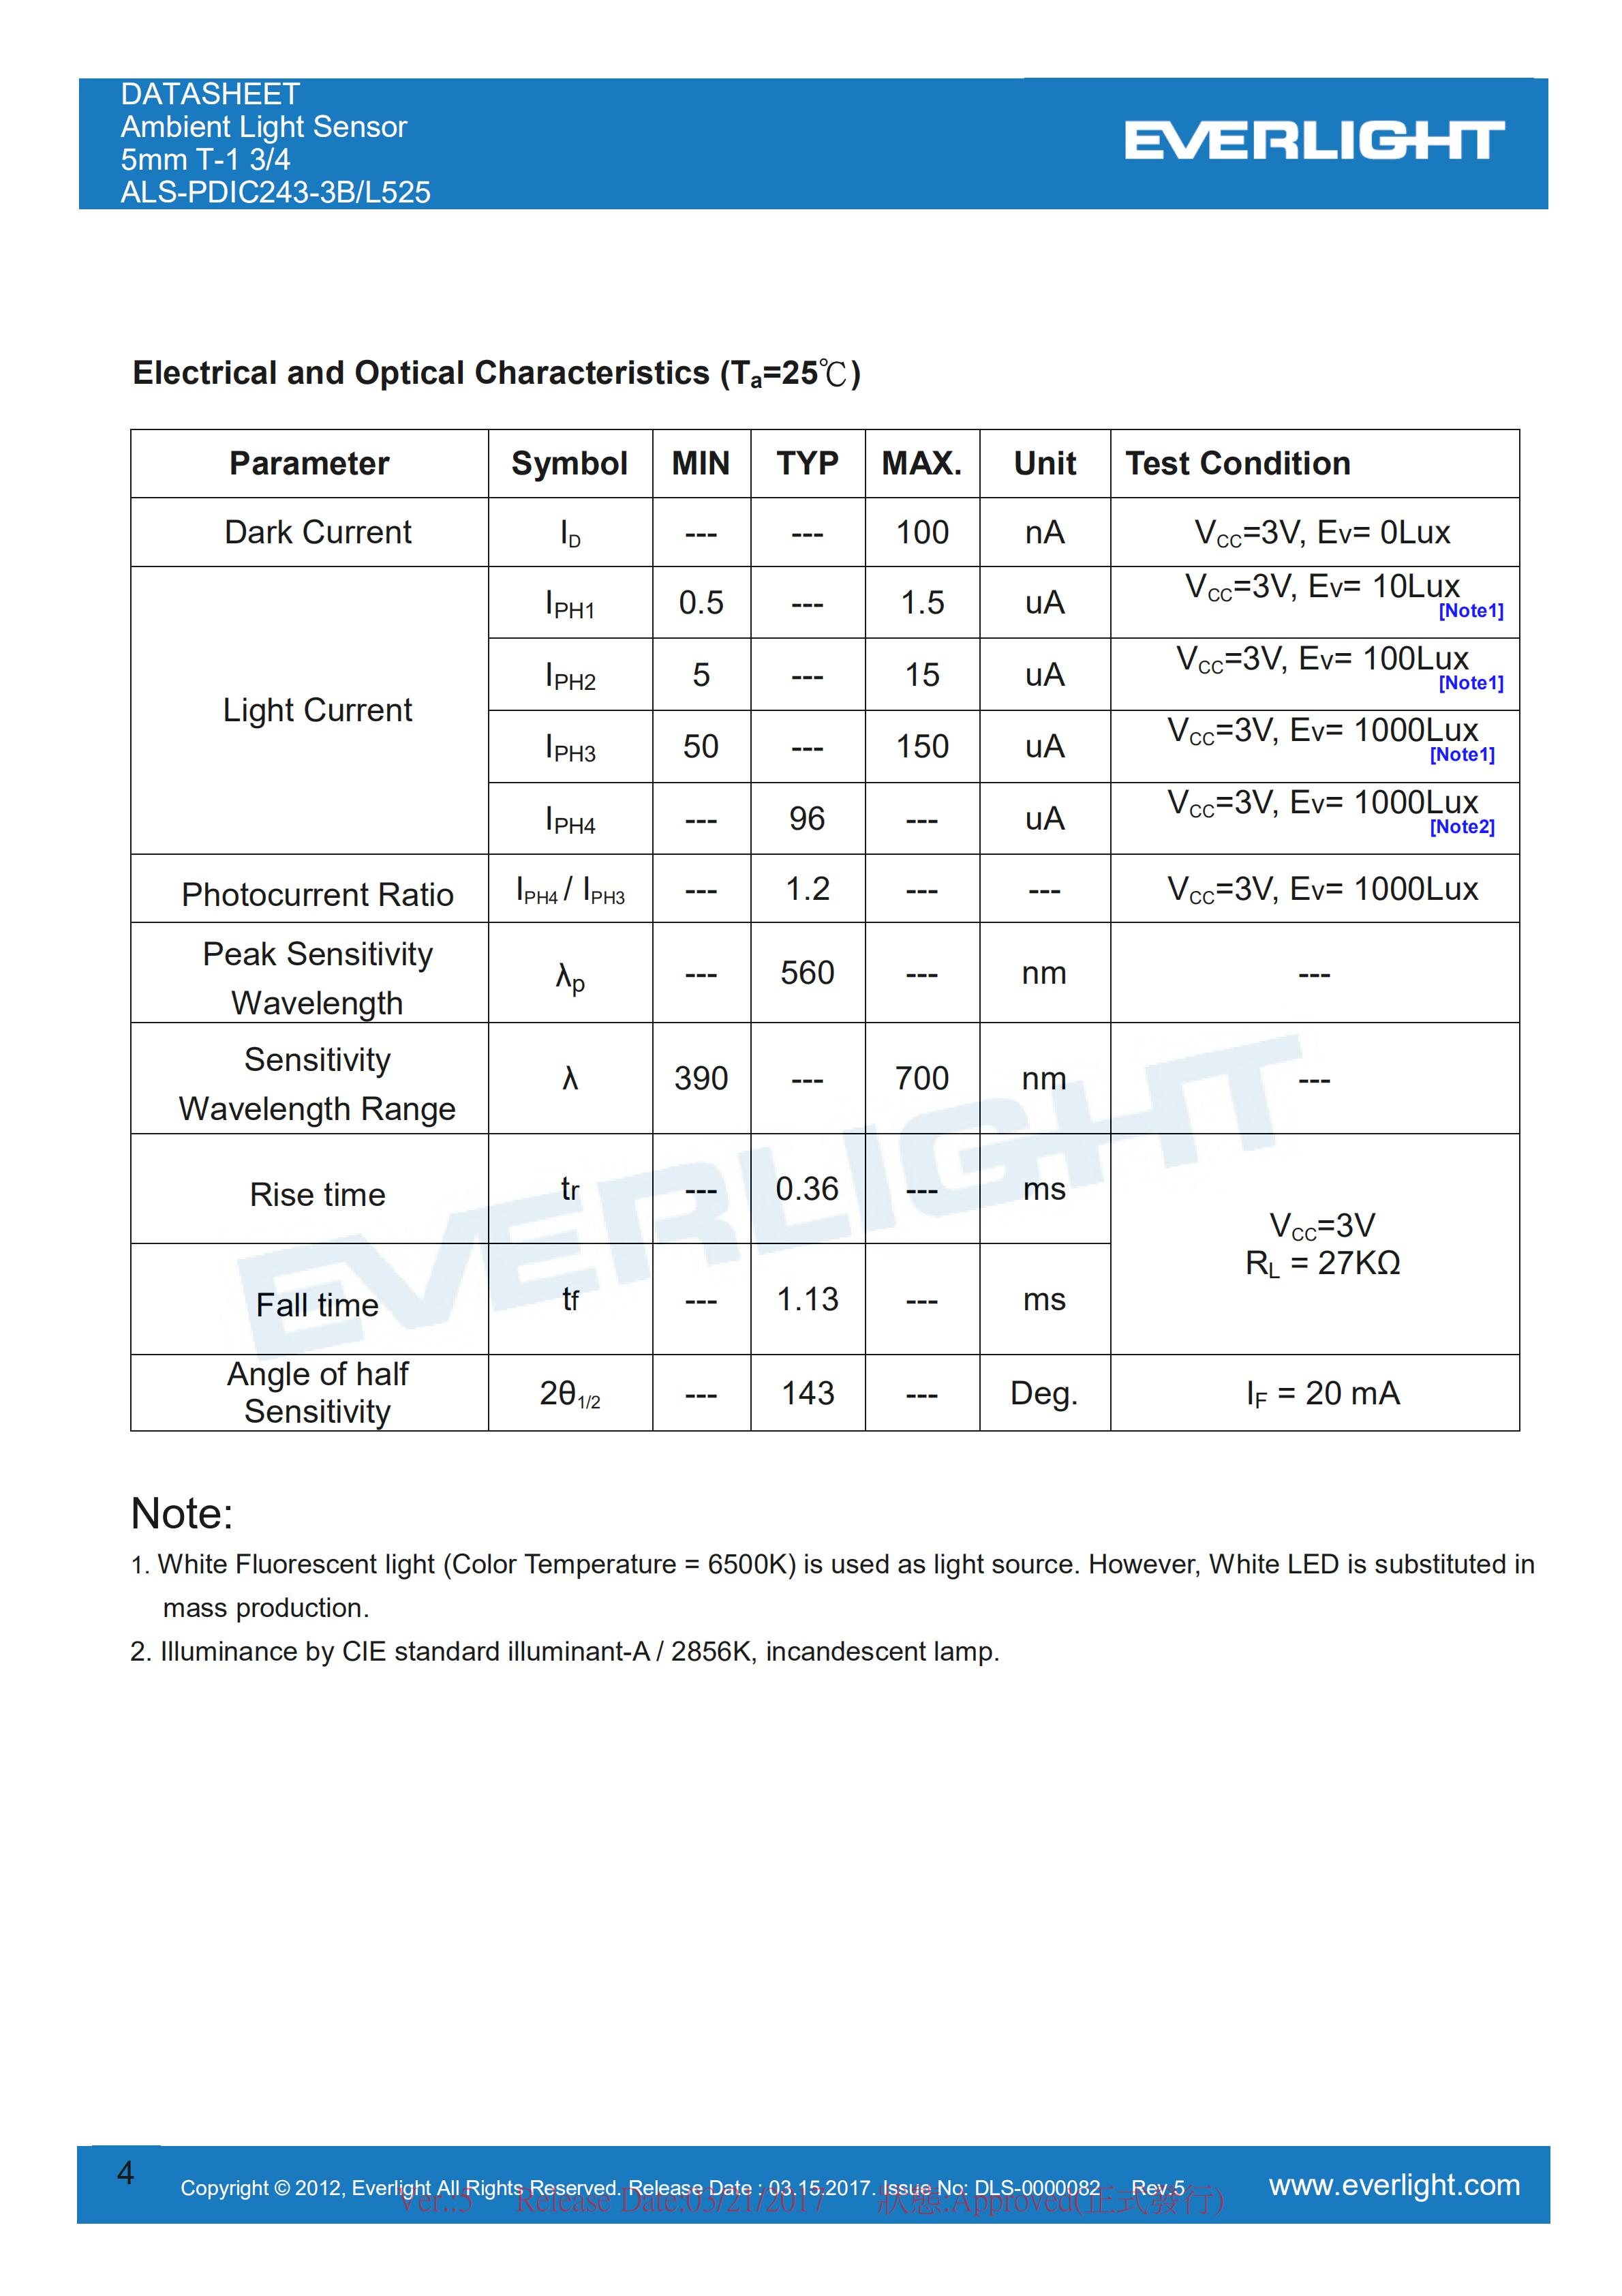 Everlight Ambient Light Sensor ALS-PDIC243-3B/L525 Datasheet